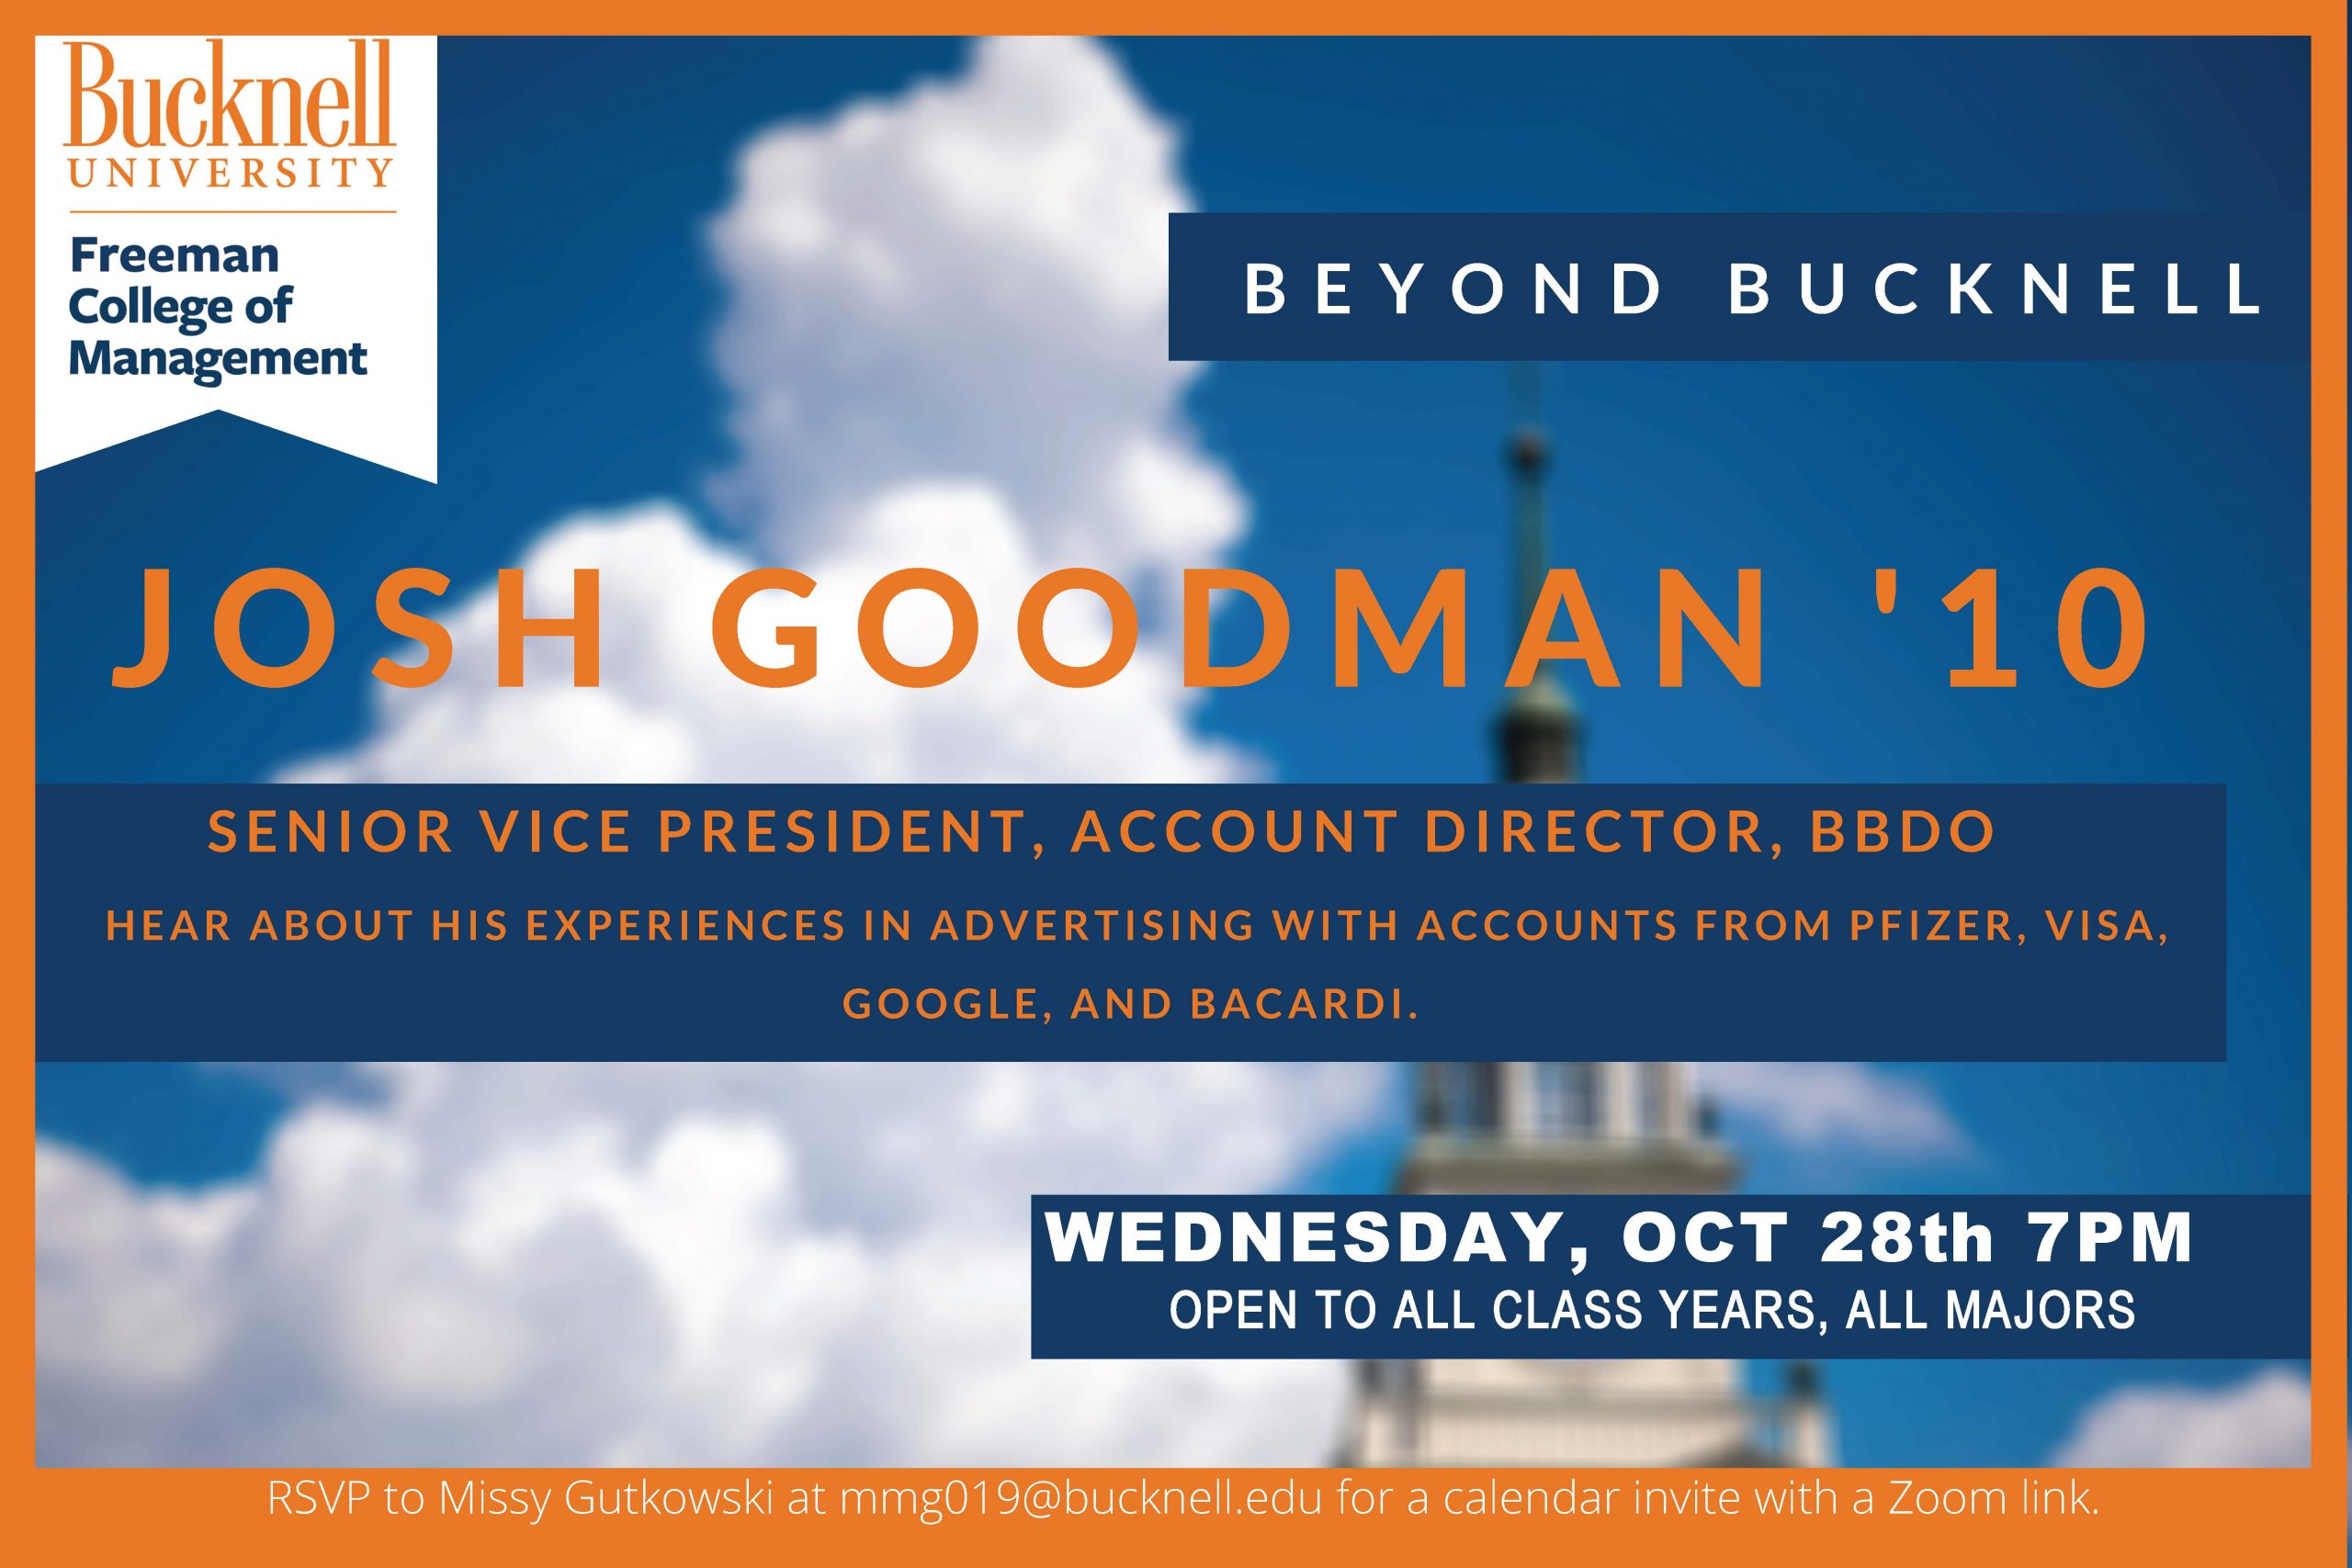 Beyond Bucknell Speaker Series presents Josh Goodman ’10, SVP at BBDO